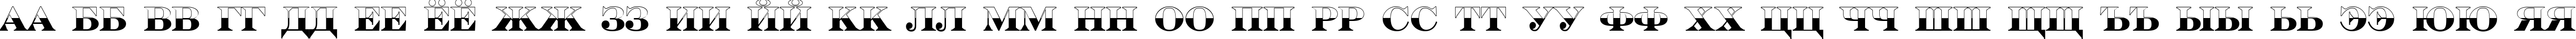 Пример написания русского алфавита шрифтом a_SeriferTitulB&W Bold